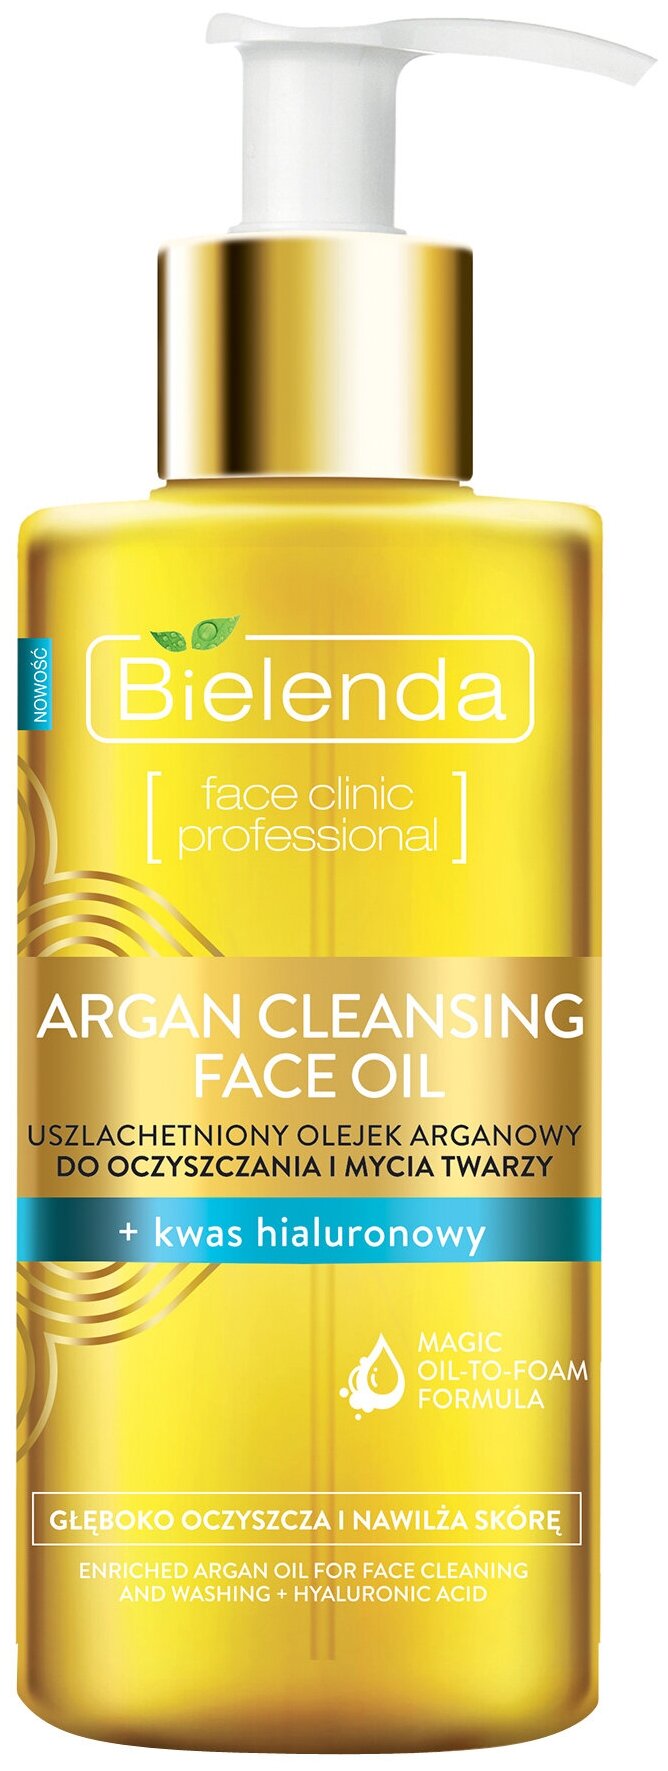 BIELENDA ARGAN CLEANSING FACE OIL       ,140